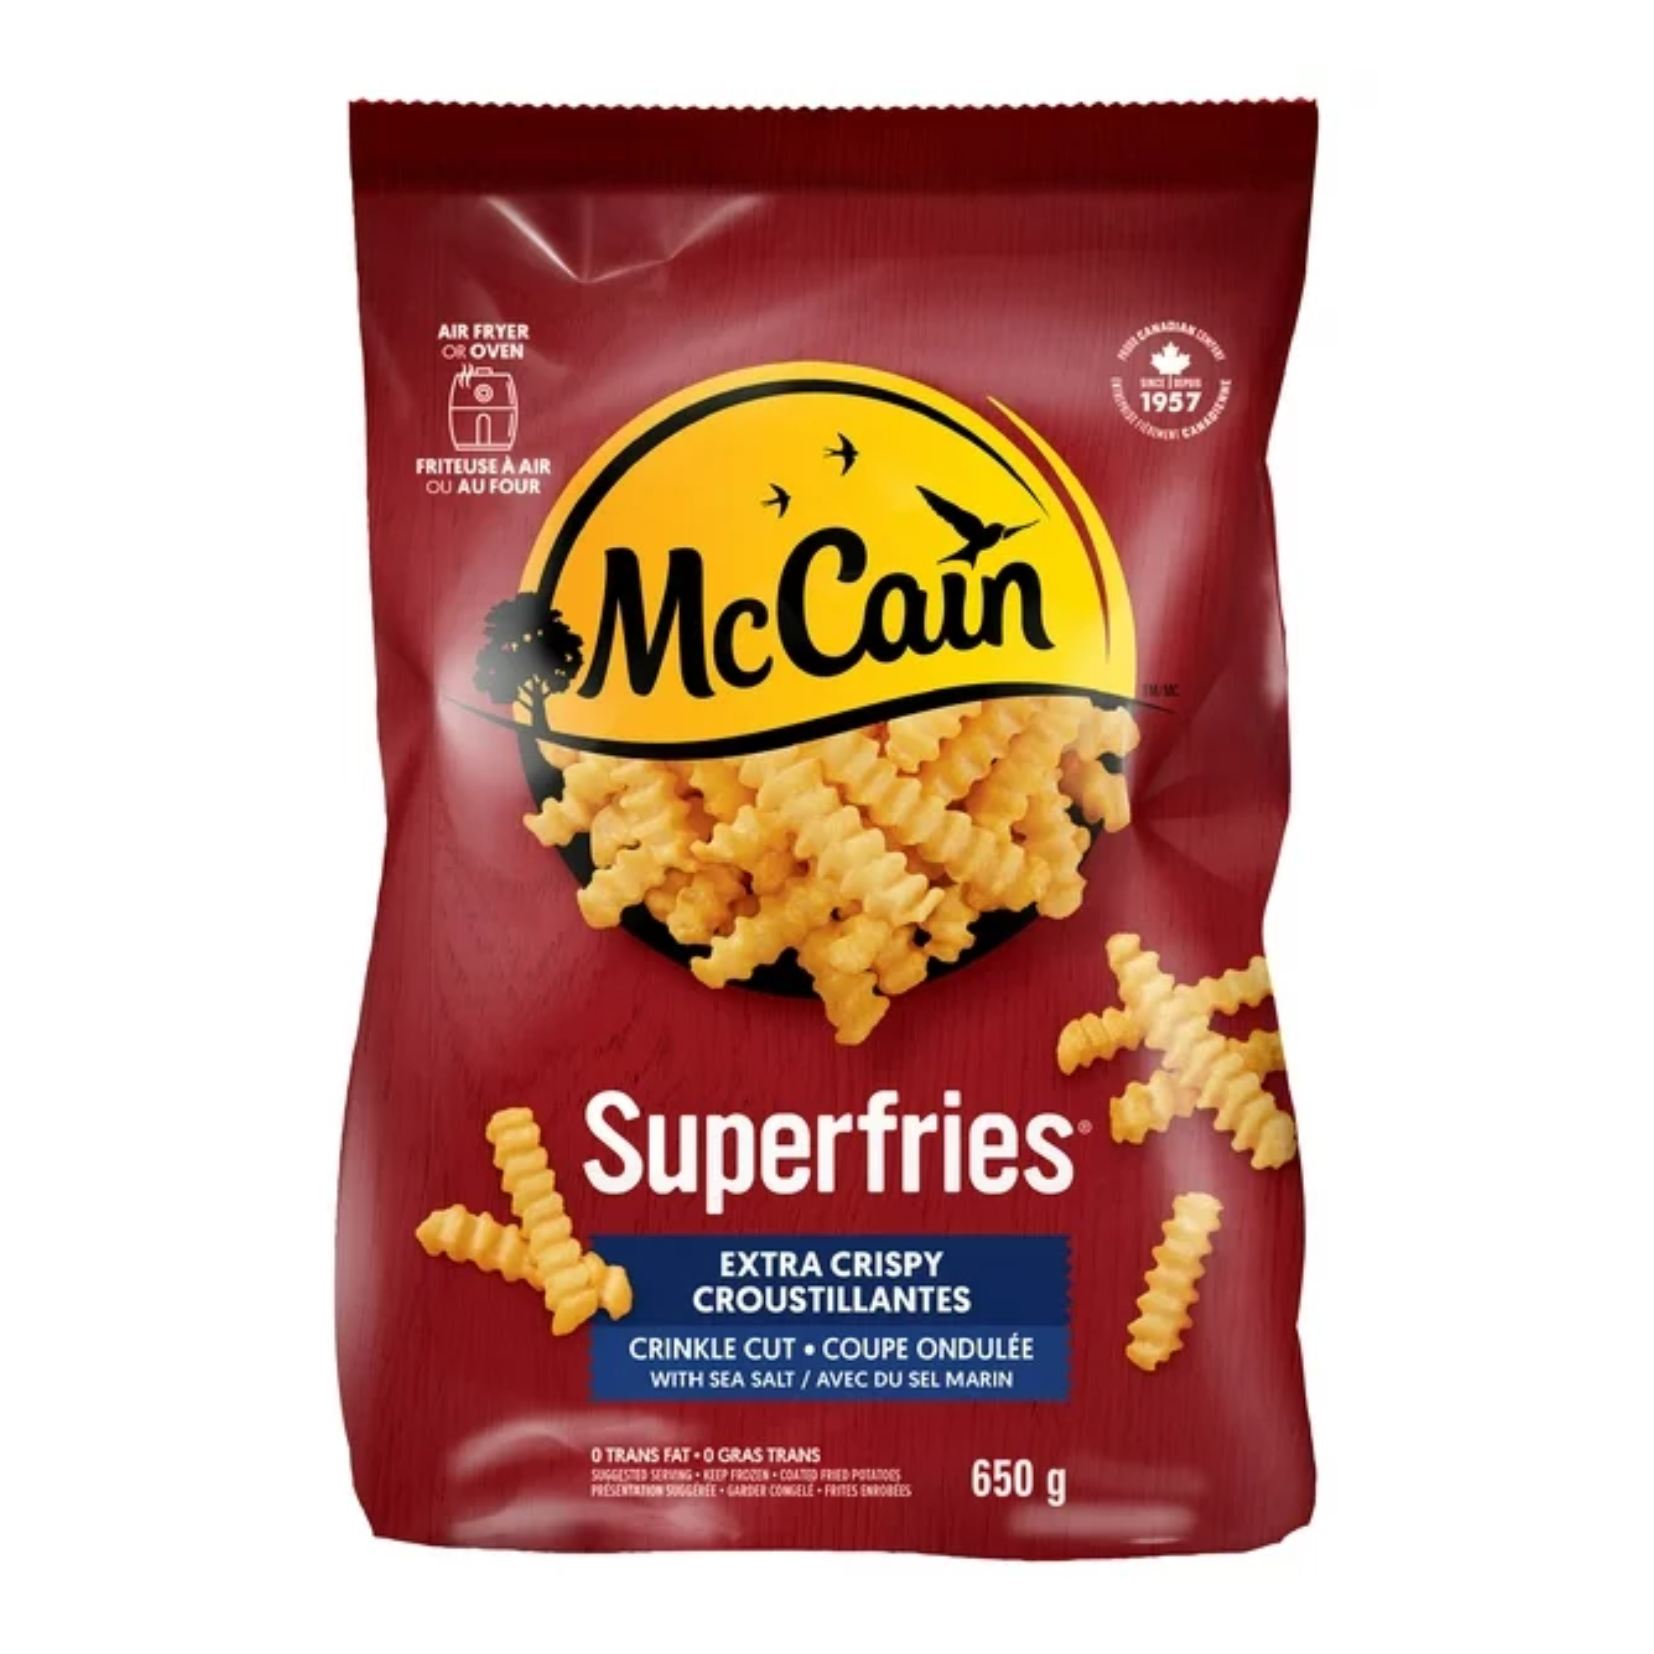 McCain Extra Crispy Crinkle Cut Superfries 650g